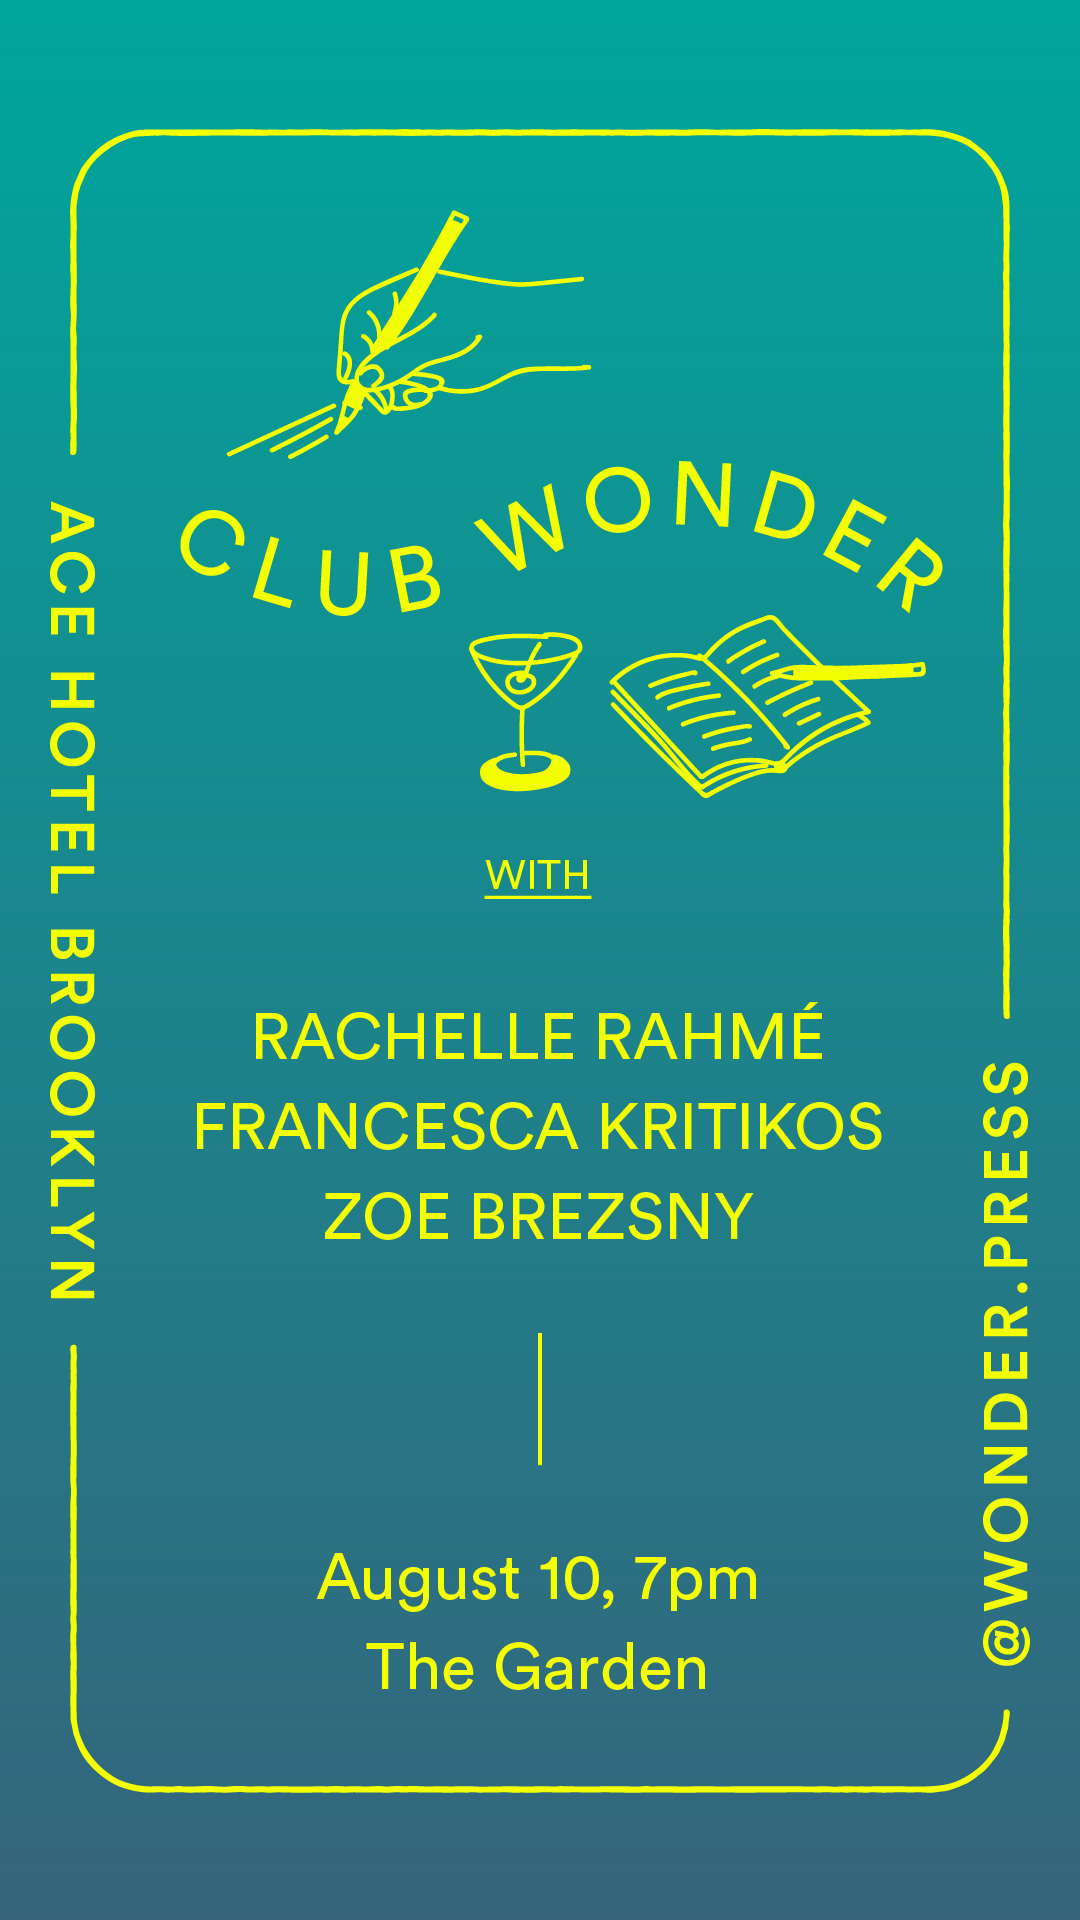 Club wonder promotional flyer